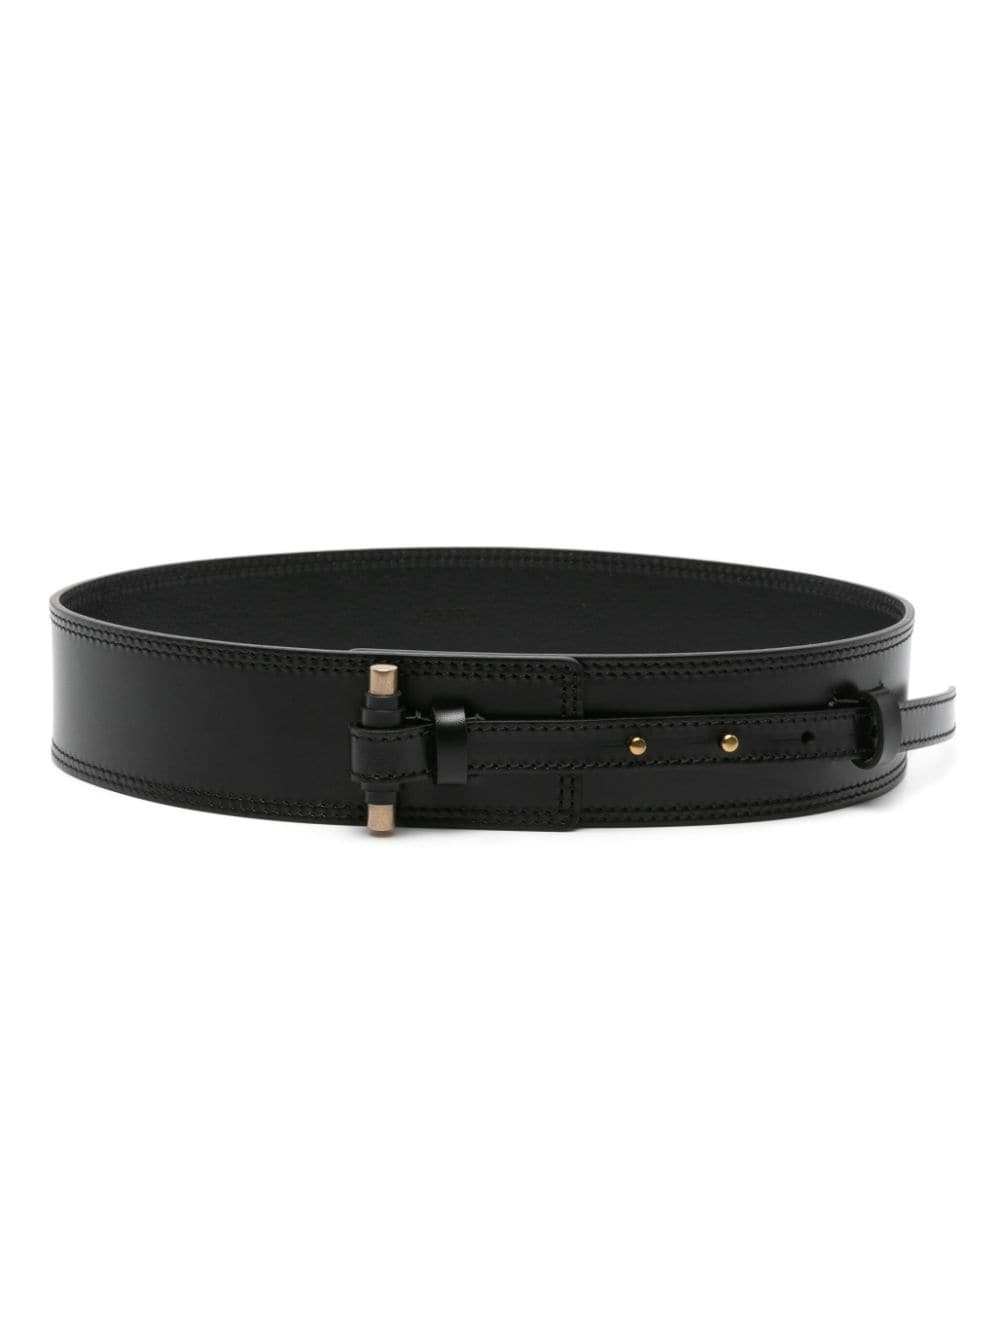 Vigo buckled leather belt - 1